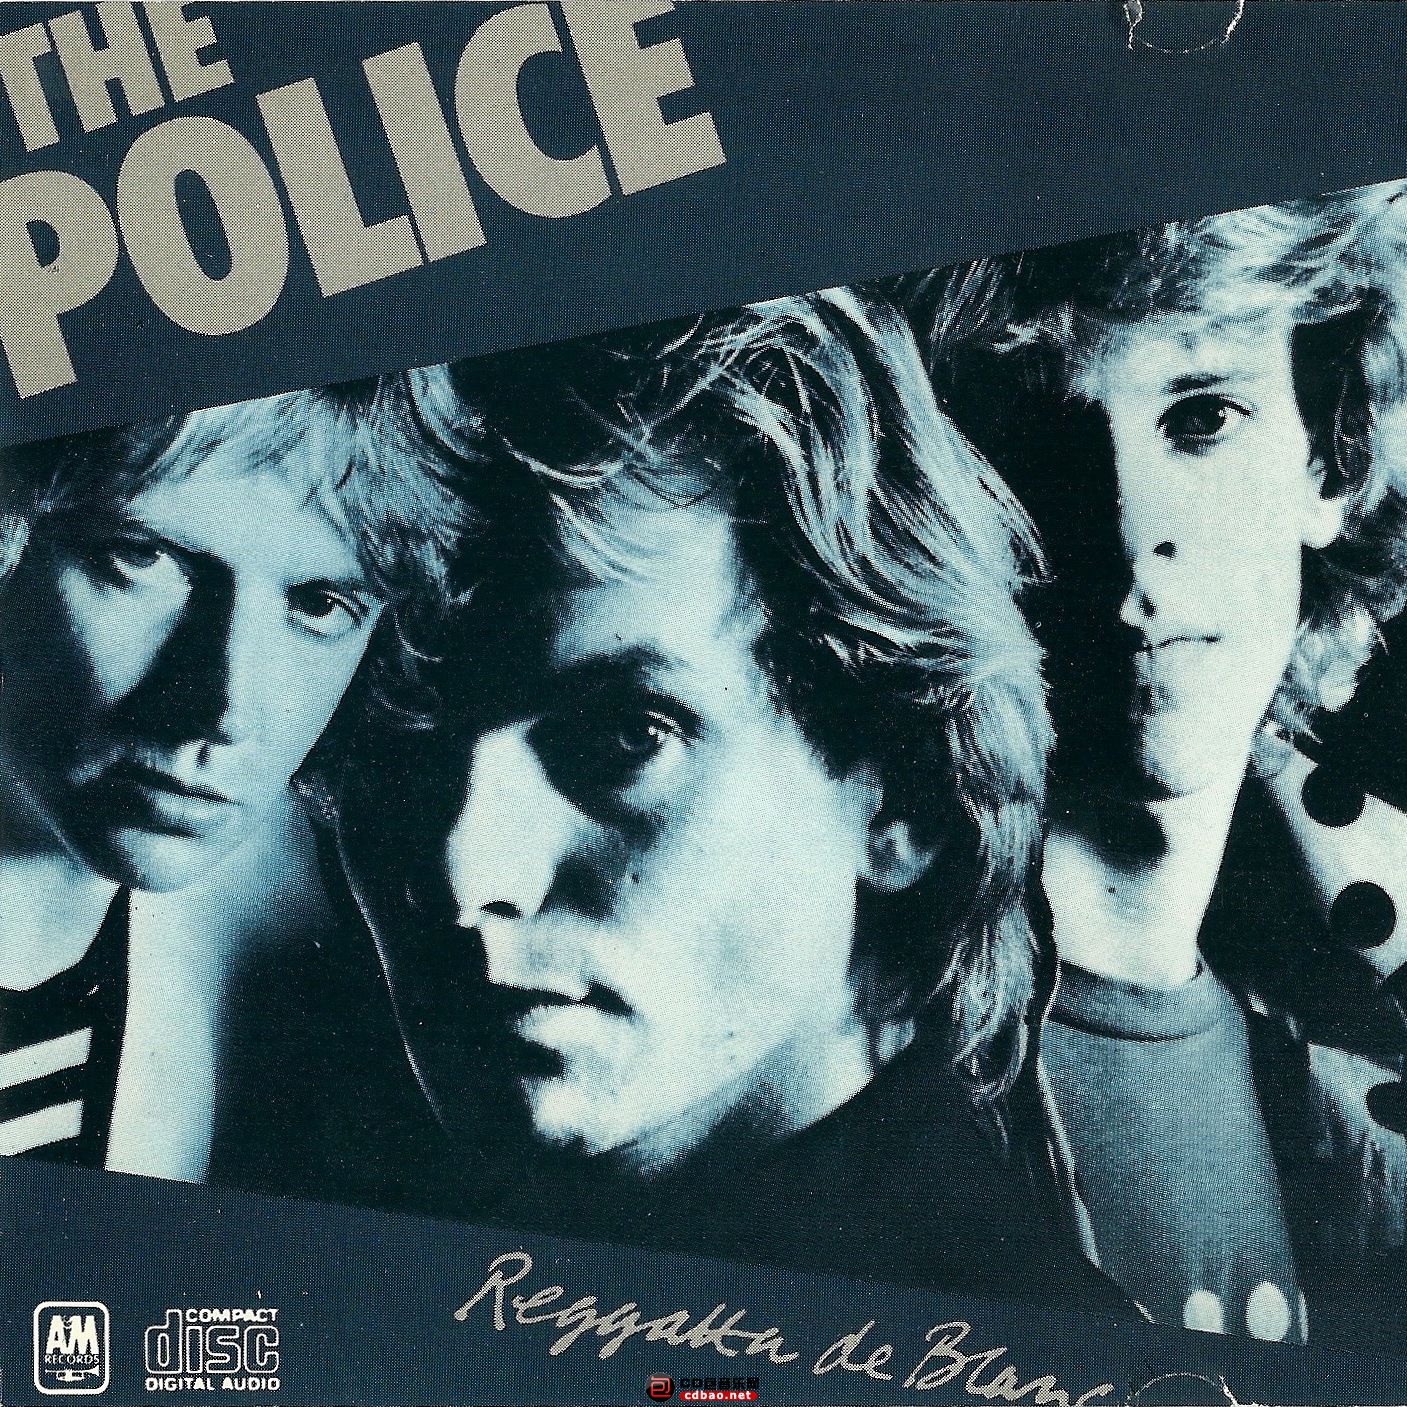 The Police - Reggatta de Blanc frontal.jpg